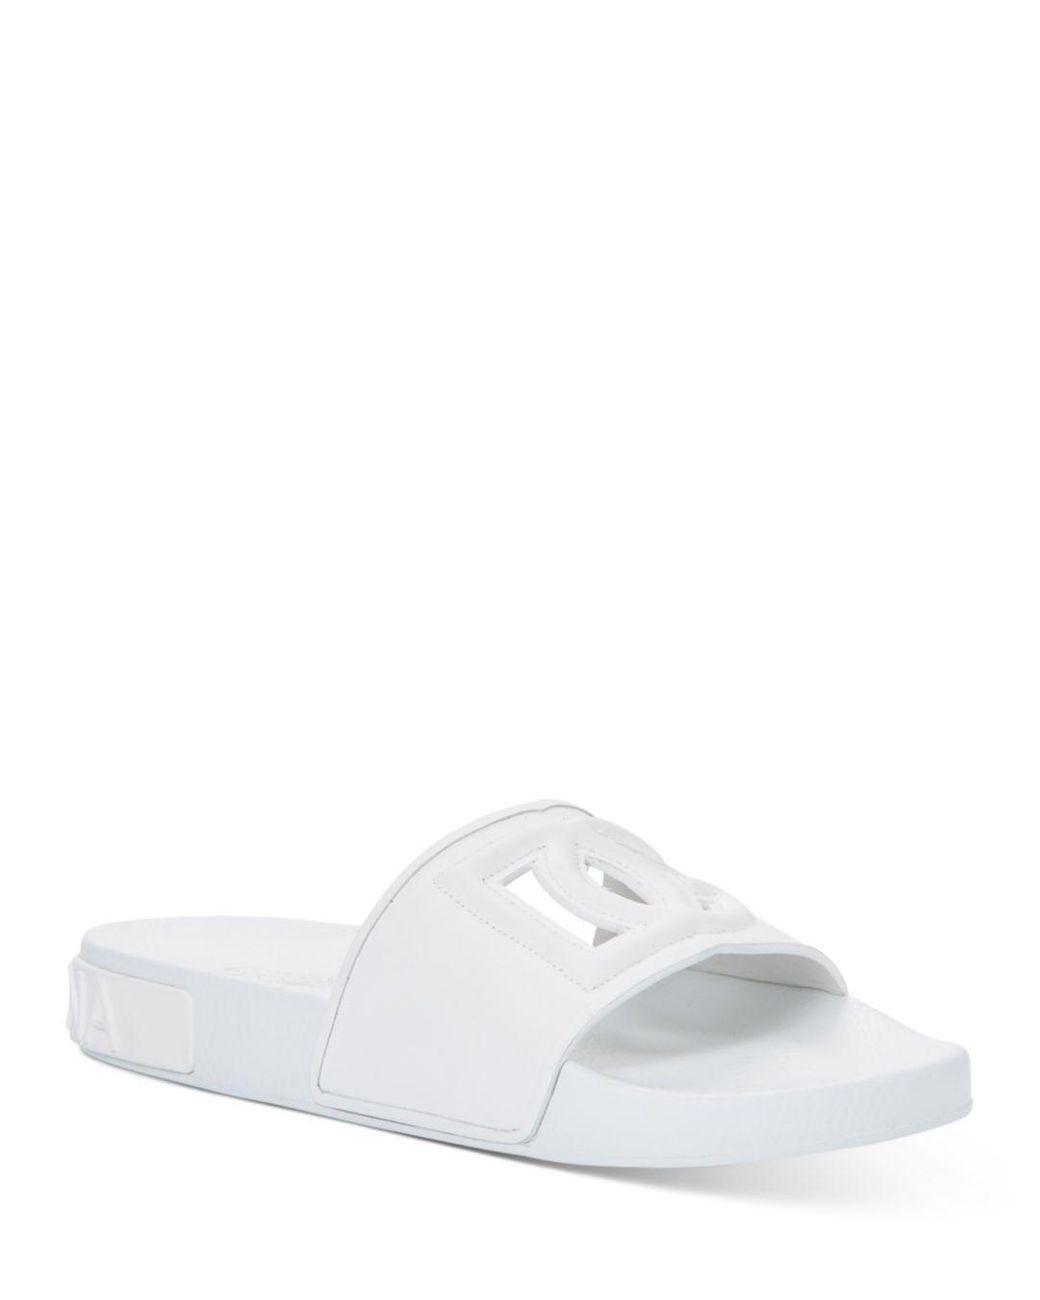 Dolce & Gabbana Monogram Beachwear Slide Sandals in White - Lyst